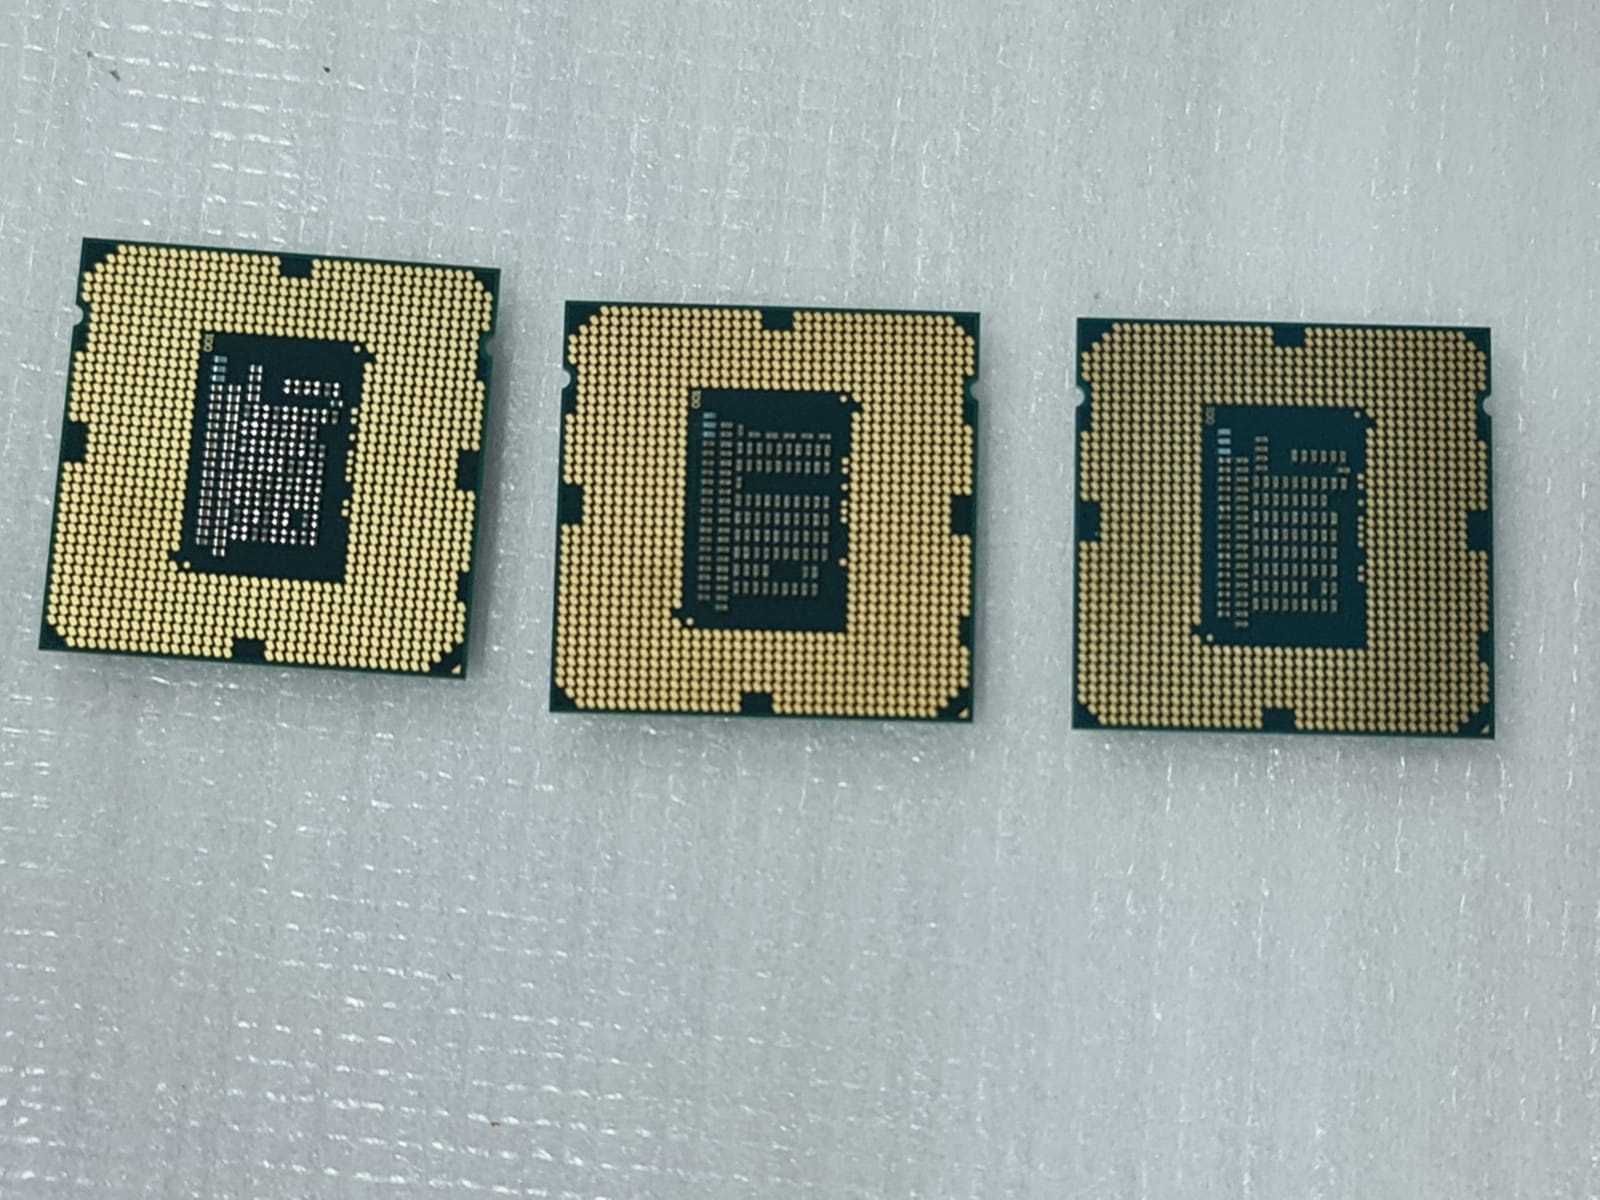 Procesor Intel Core i3 3240, 3400MHz, 3MB, socket 1155 - poze reale